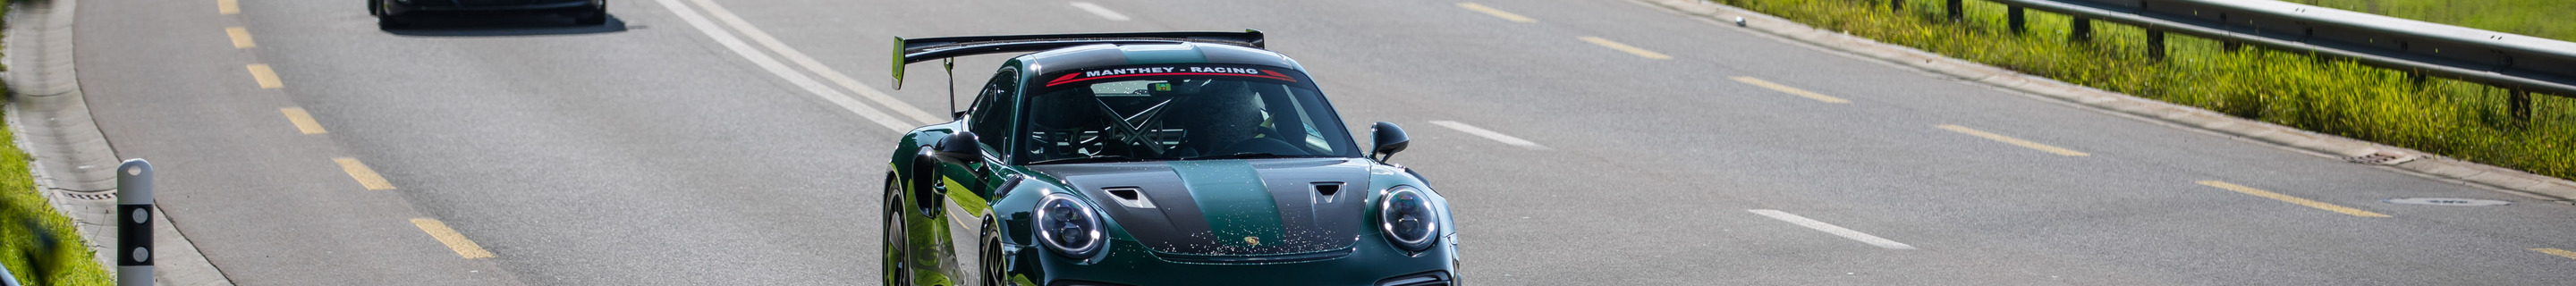 Porsche Manthey Racing 991 GT2 RS MR